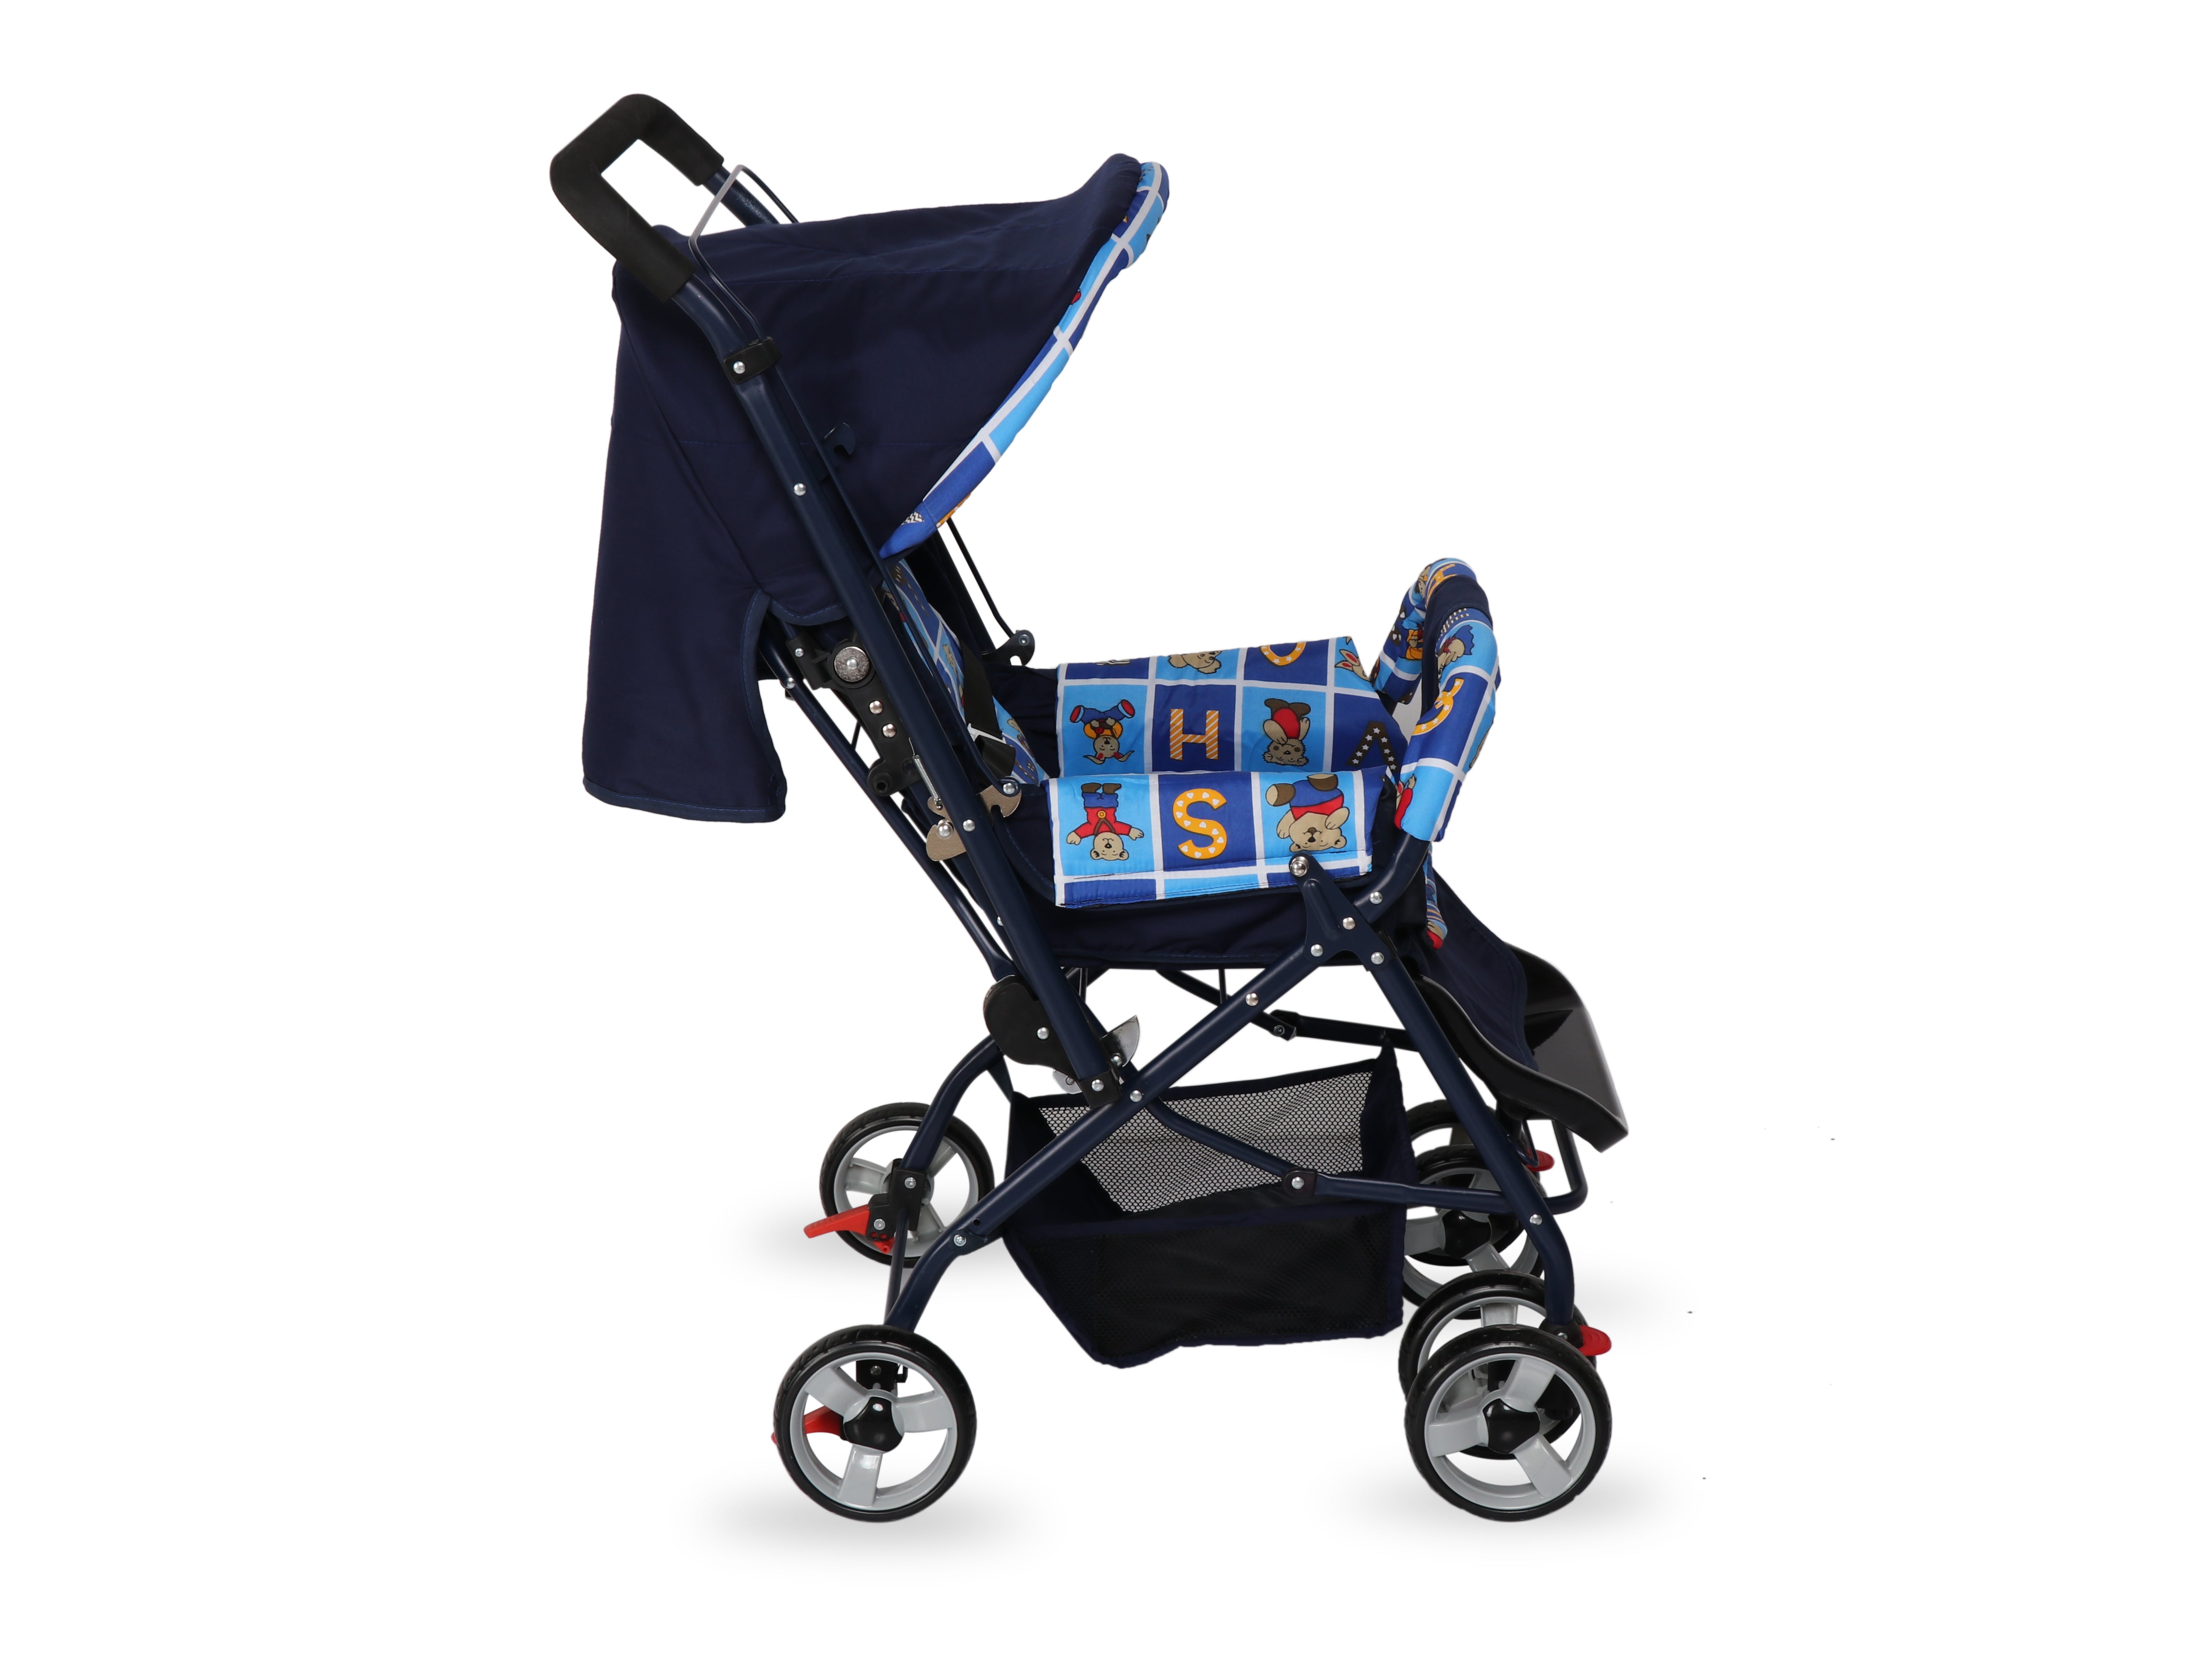 INFANTO Dyna Baby Pram/Stroller for 0-3 Years - Perfect Baby Girl Boy Gift